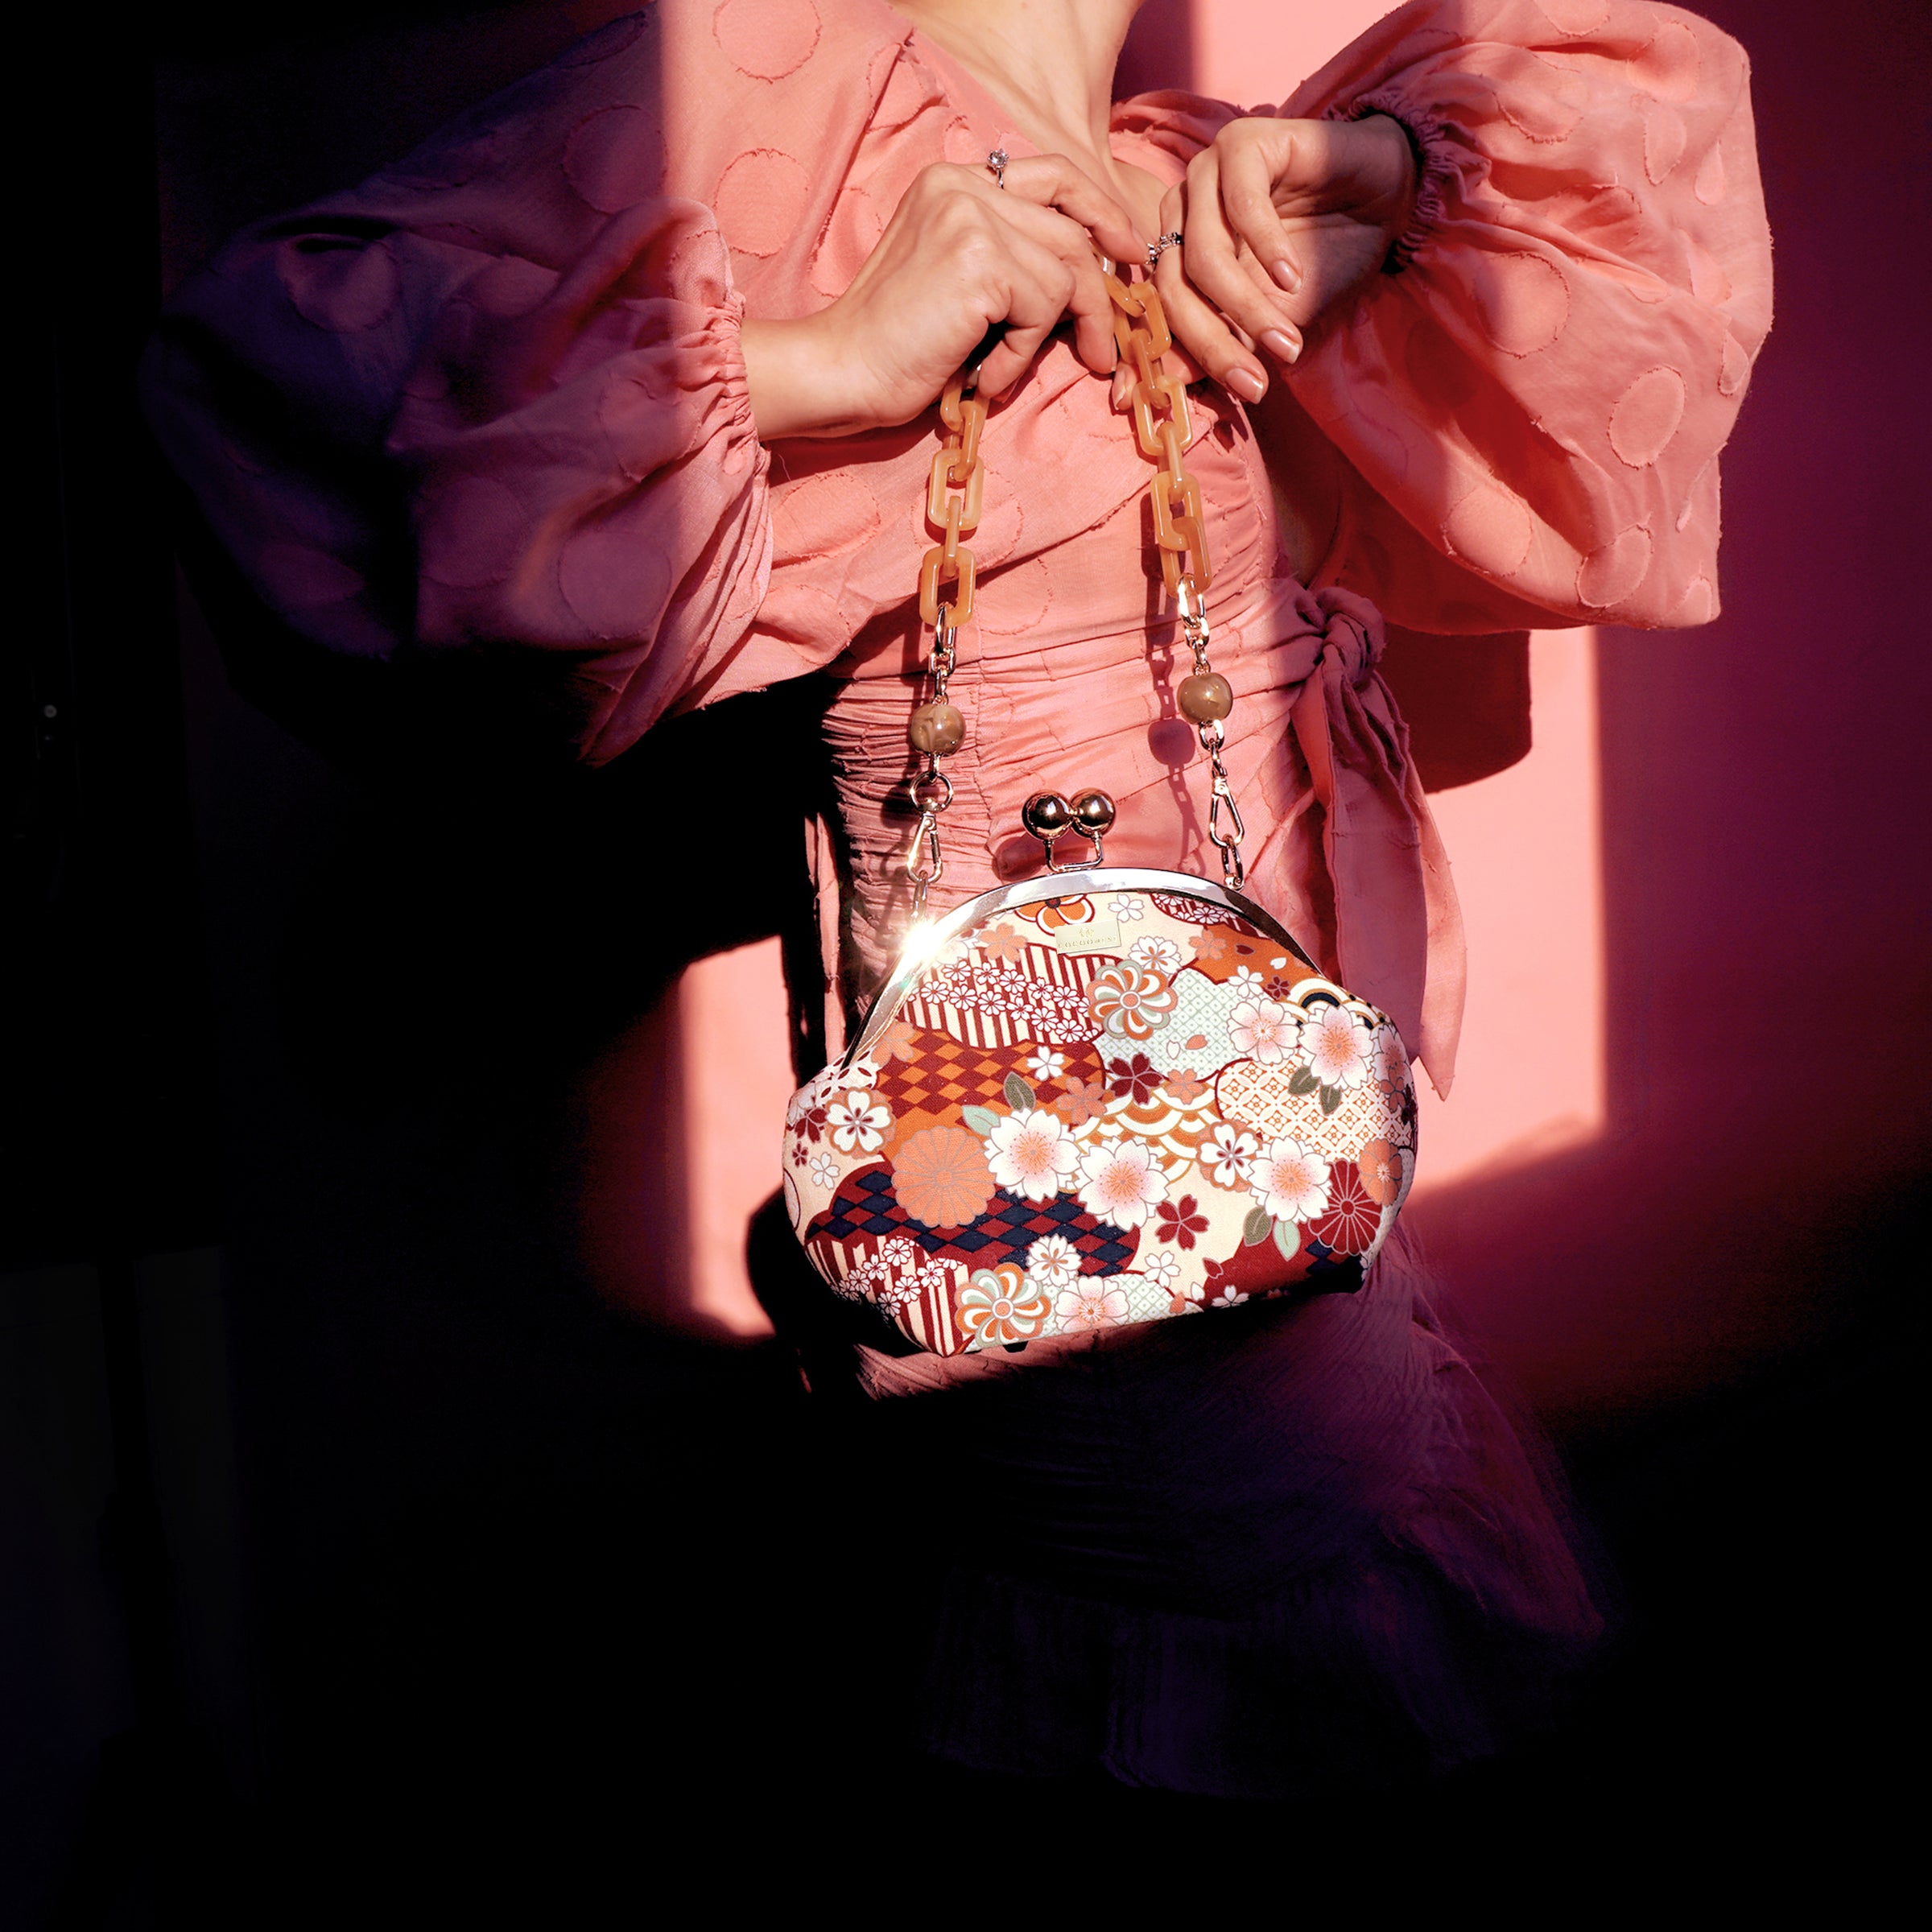 Acrylic Chain Handle Clasp Sling Bag - Natsume